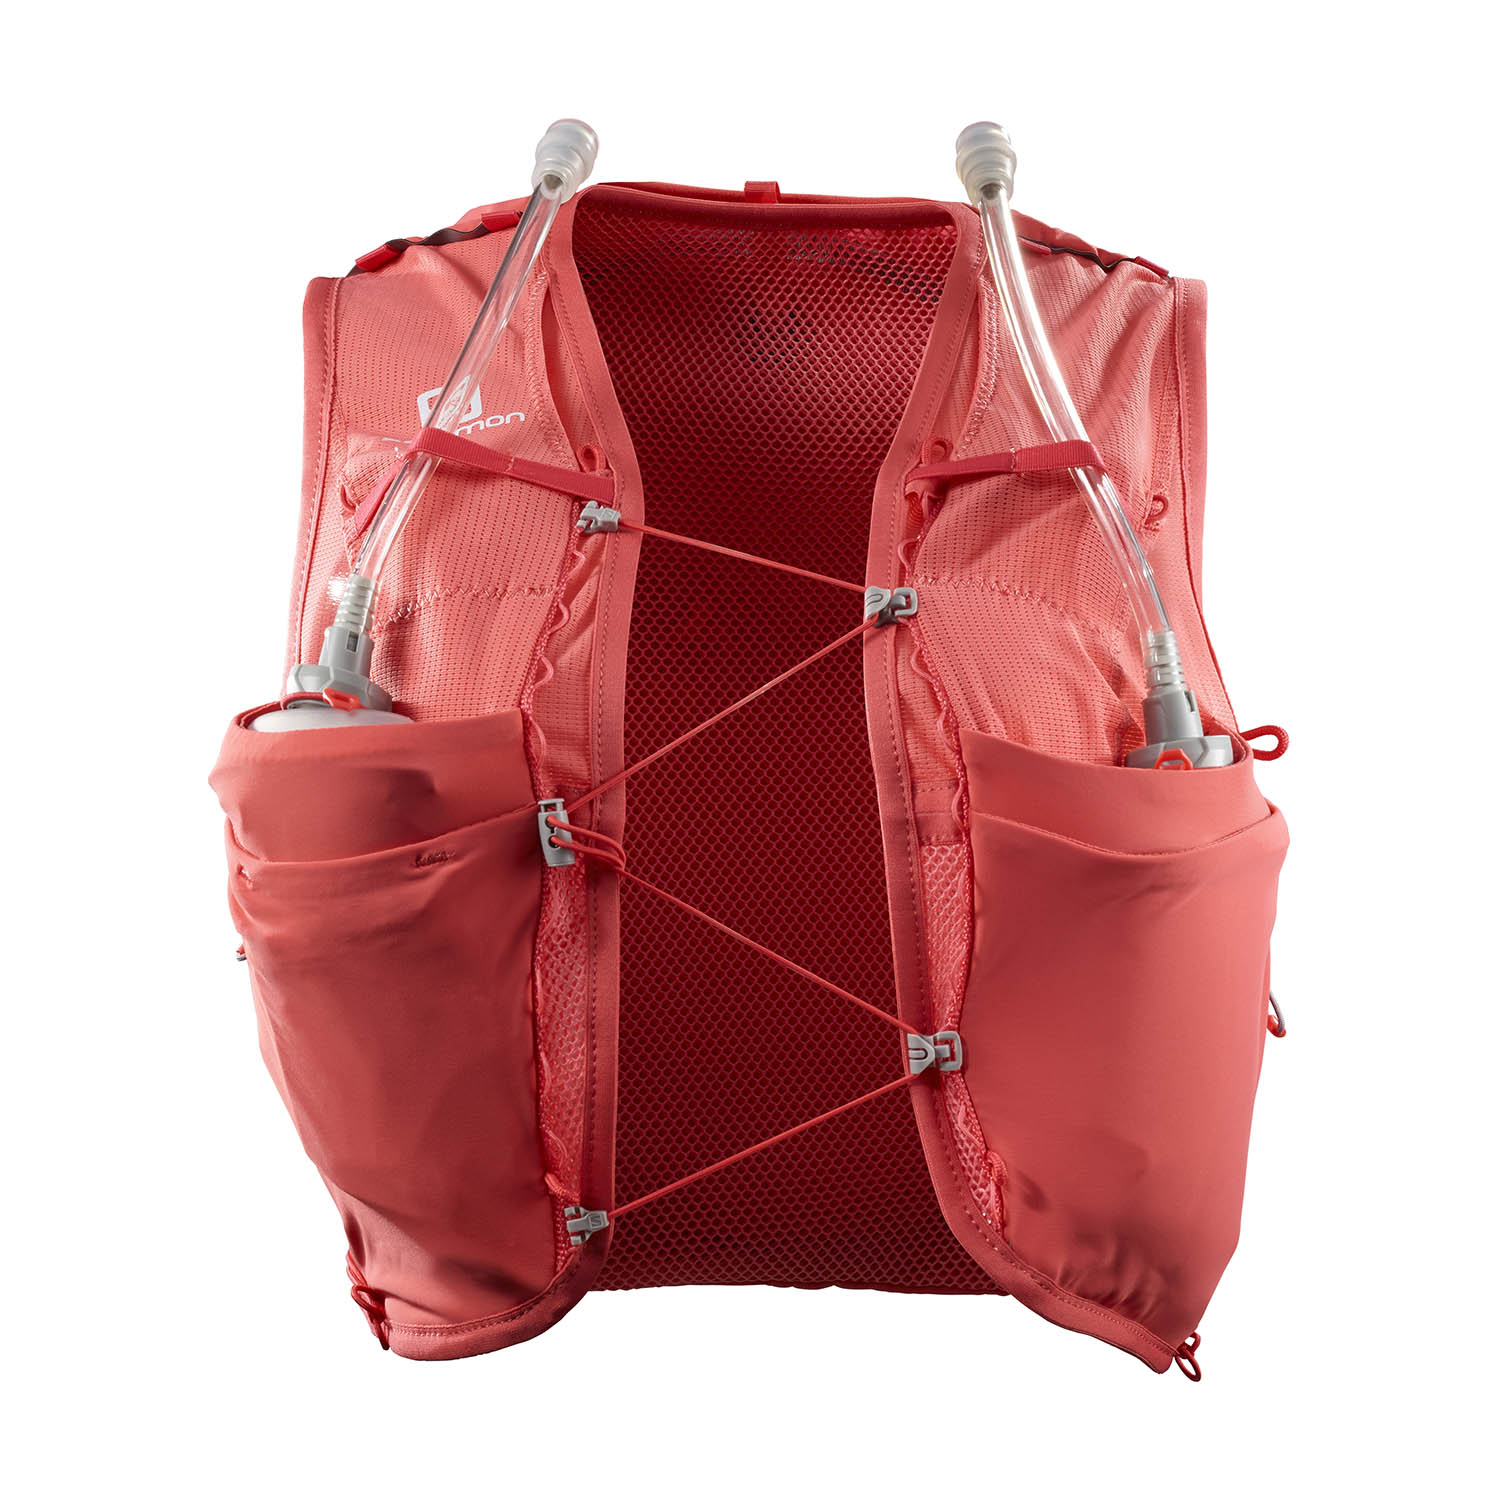 salomon adv skin 8 set w 2019 women's backpack